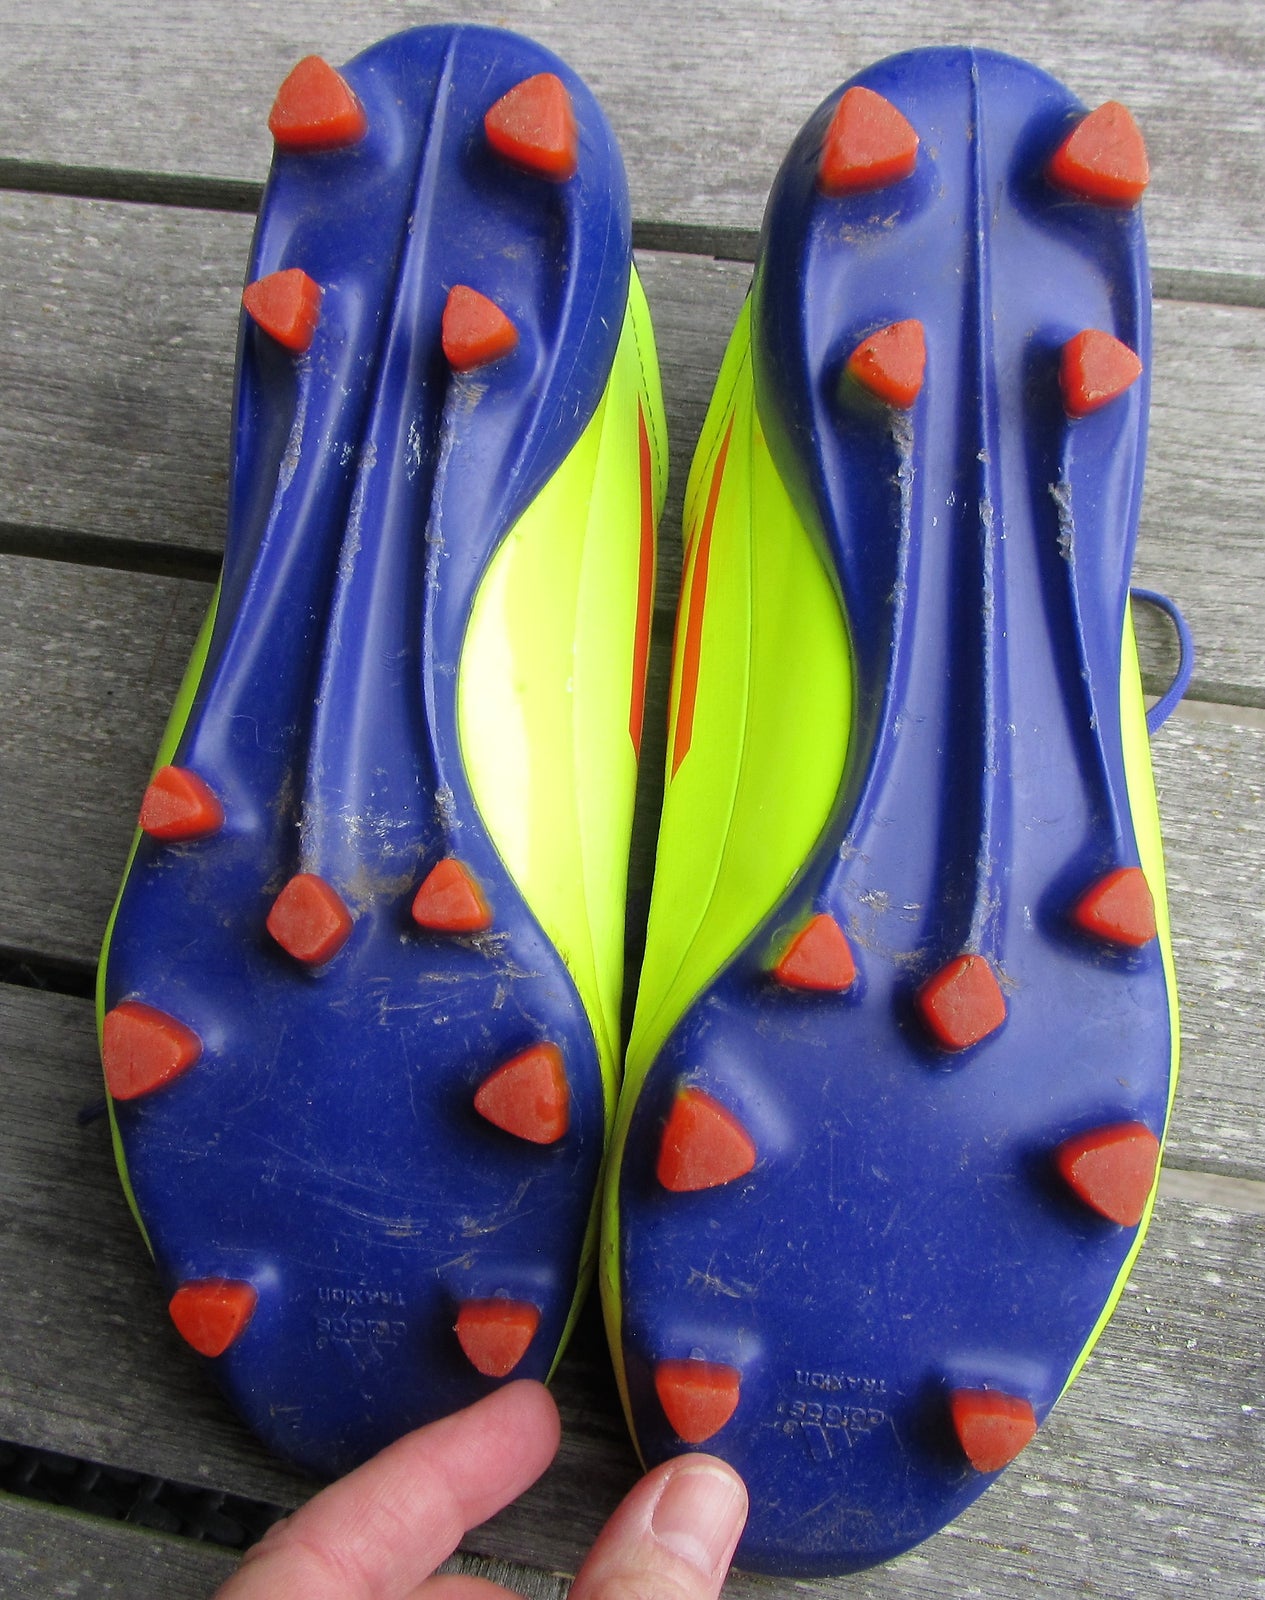 Fodboldstøvler, fodbold støvler / fodboldsko, Adidas F50